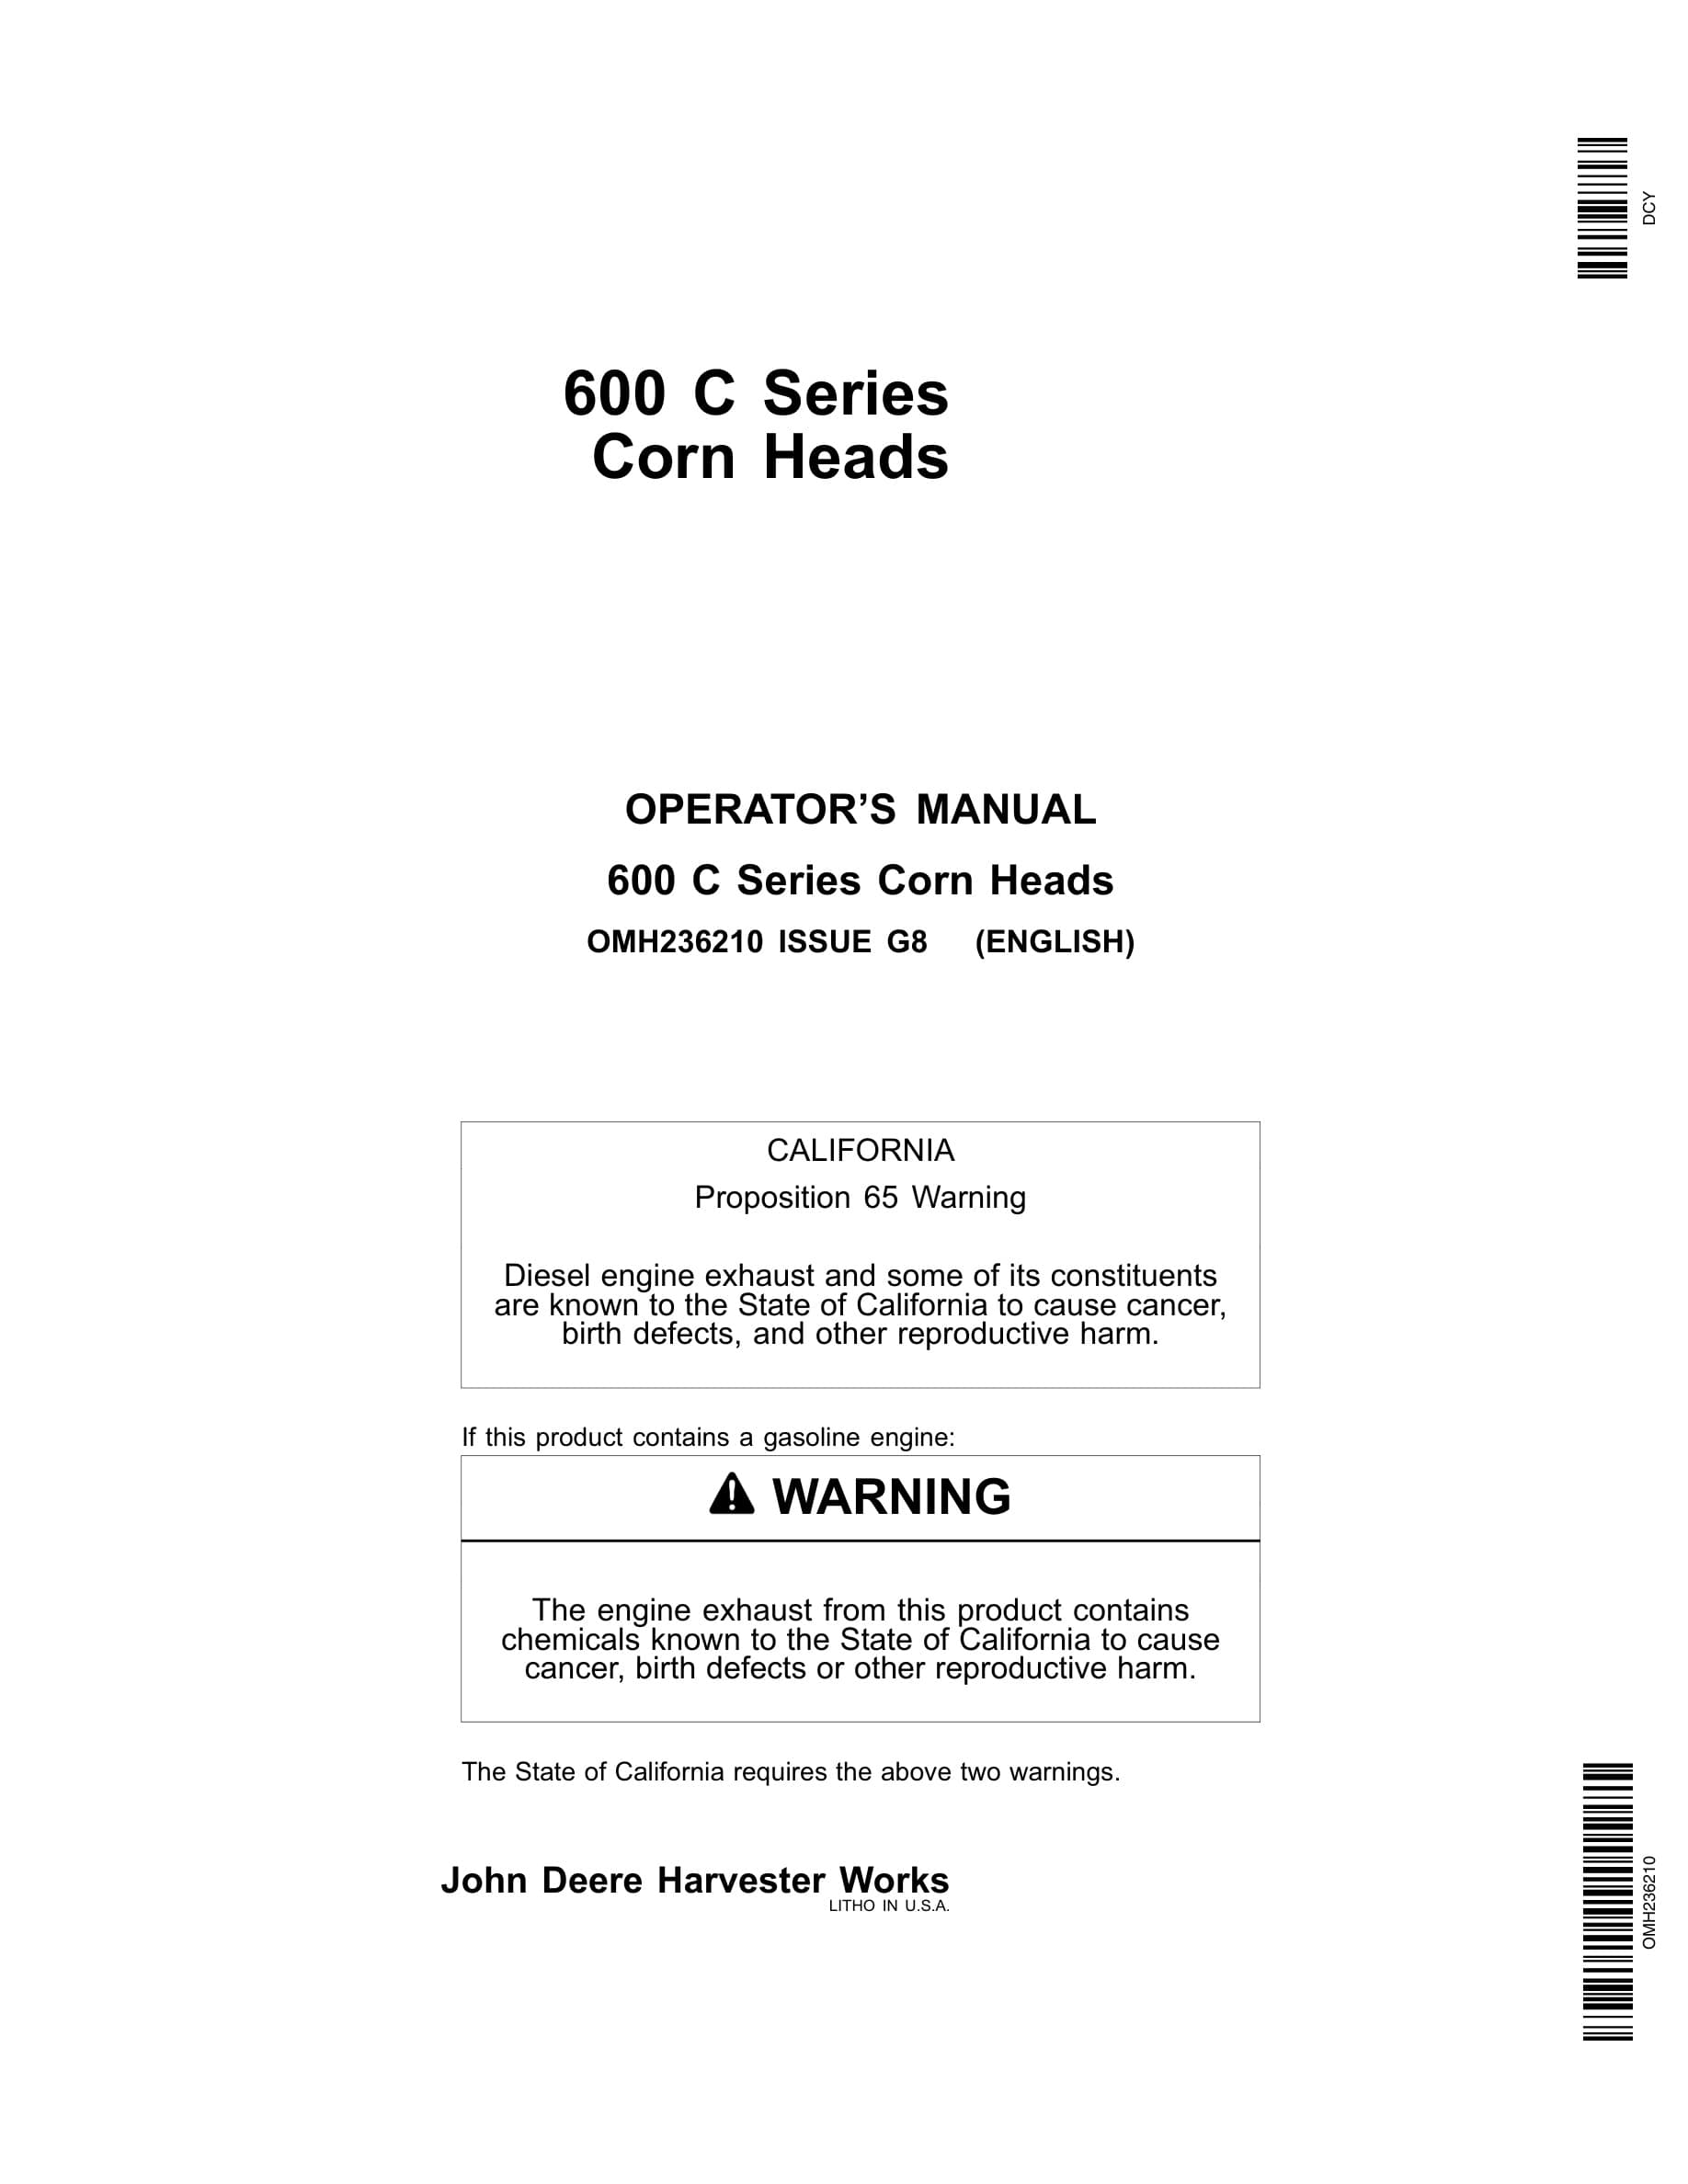 John Deere 600C Series Corn Heads Operator Manual OMH236210-1